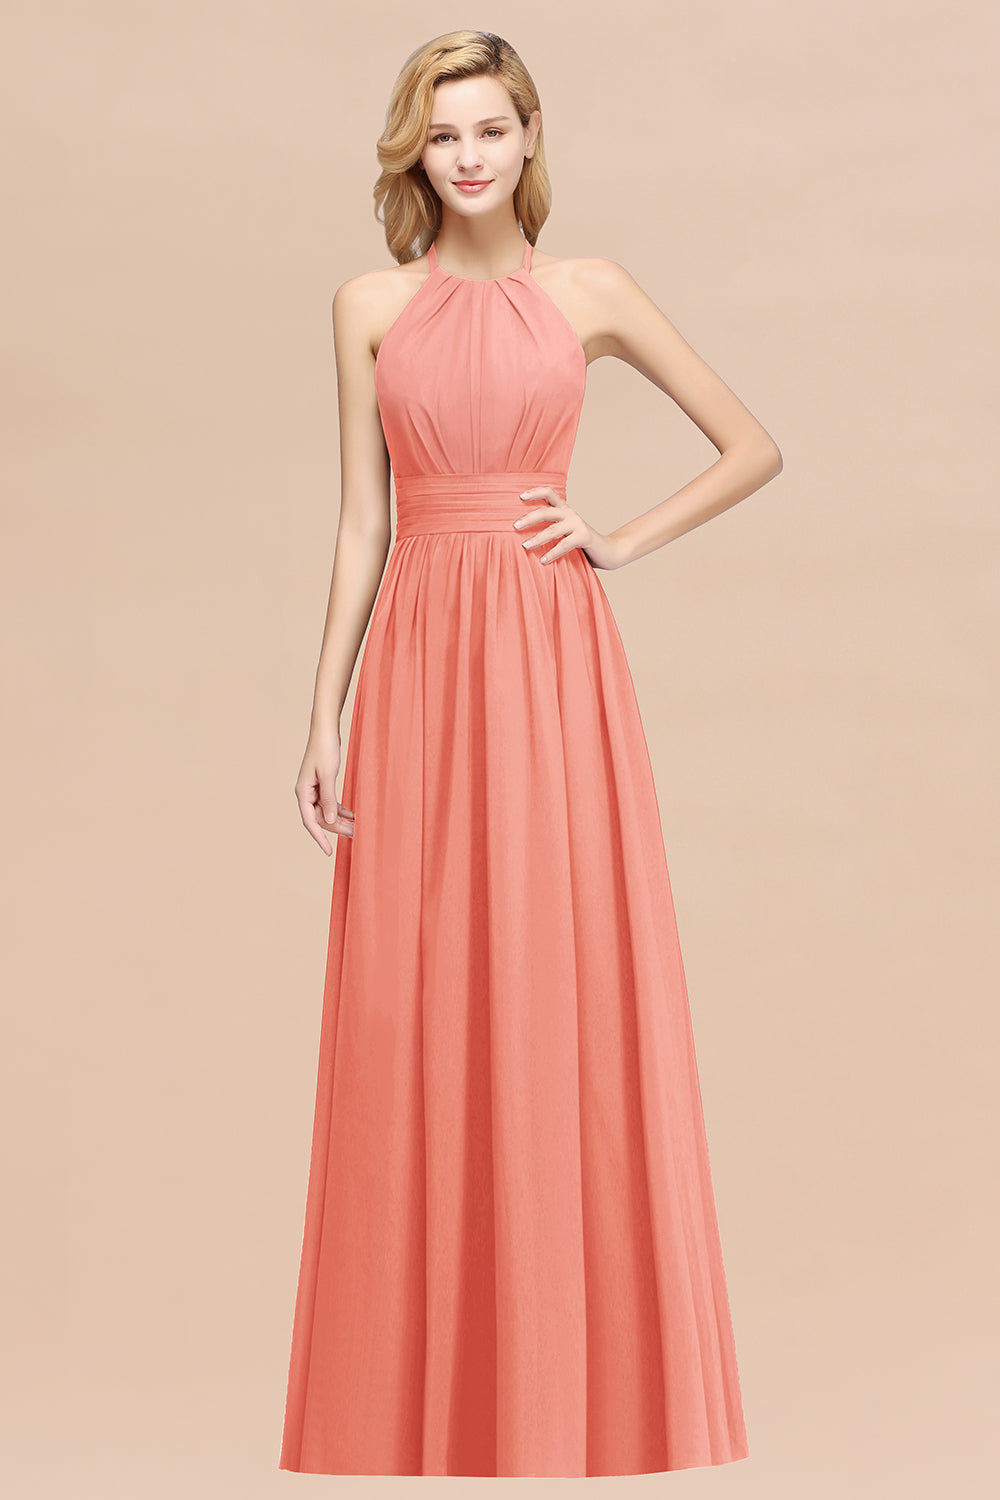 Elegant High-Neck Halter Long Affordable Bridesmaid Dresses with Ruffles-27dress